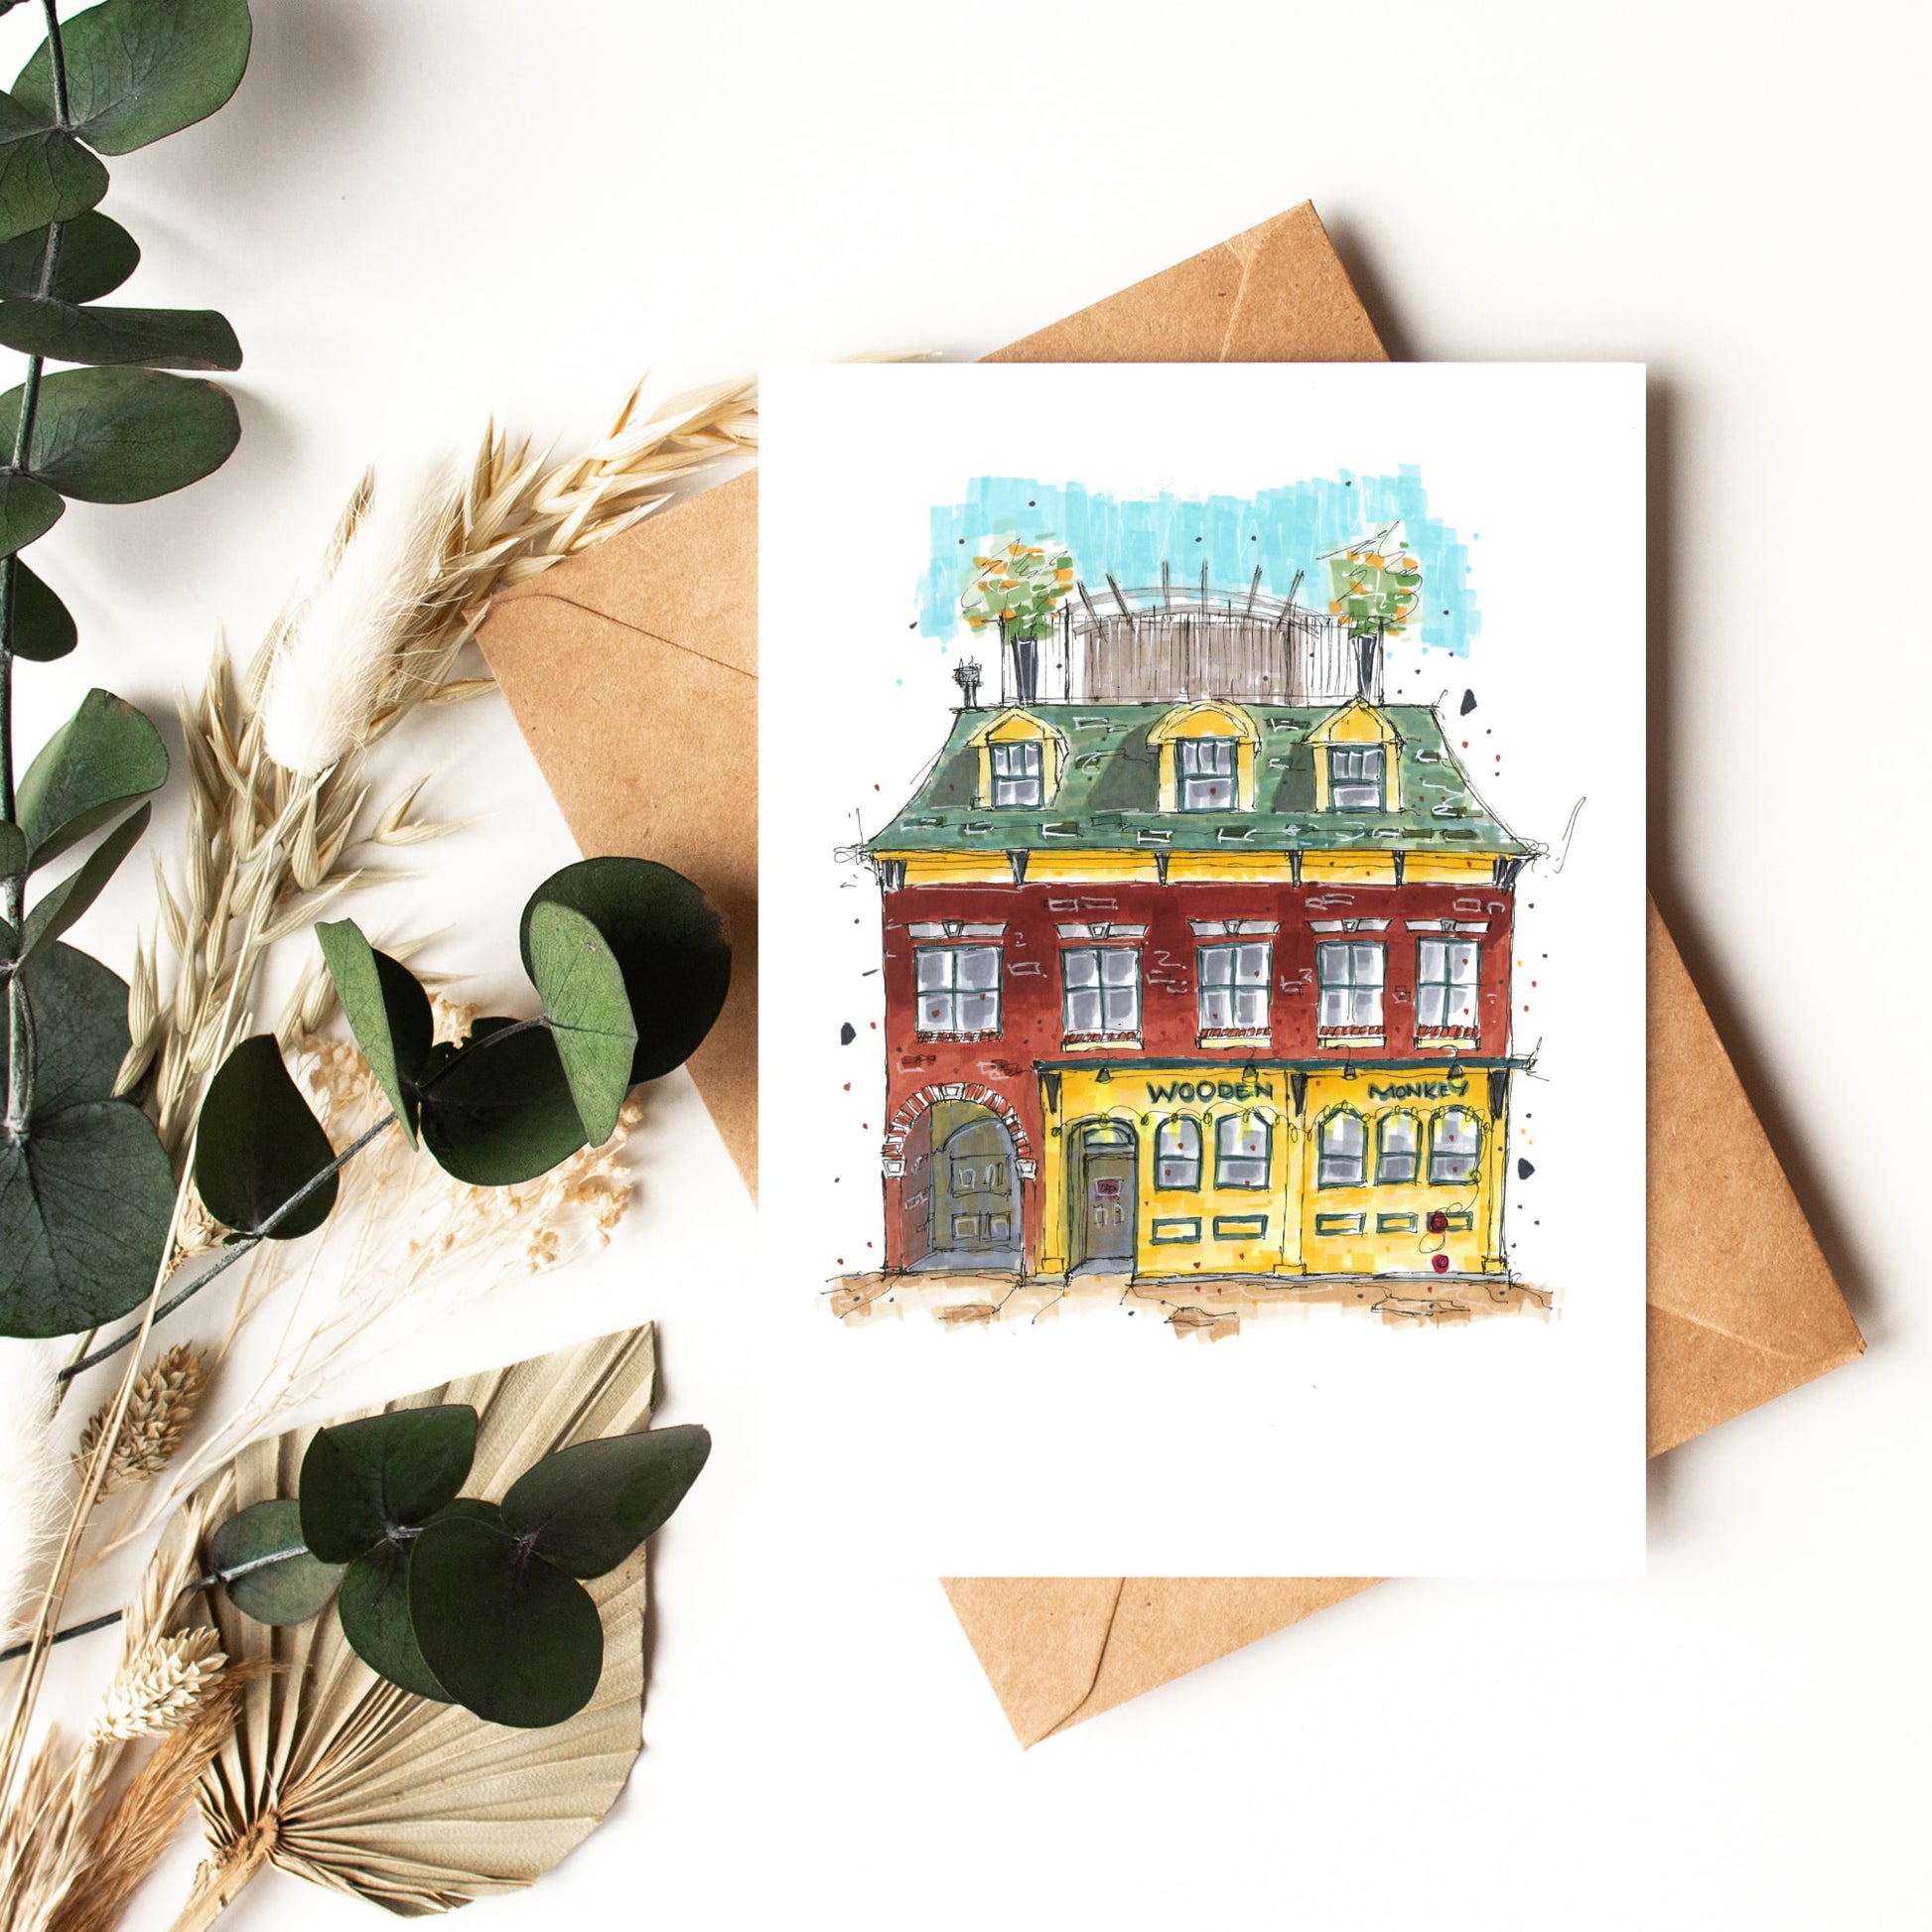 DTS0029 - The Wooden Monkey - Halifax - Storefront Sketch – Greeting Card with Envelope – Downtown Sketcher – Wynand van Niekerk